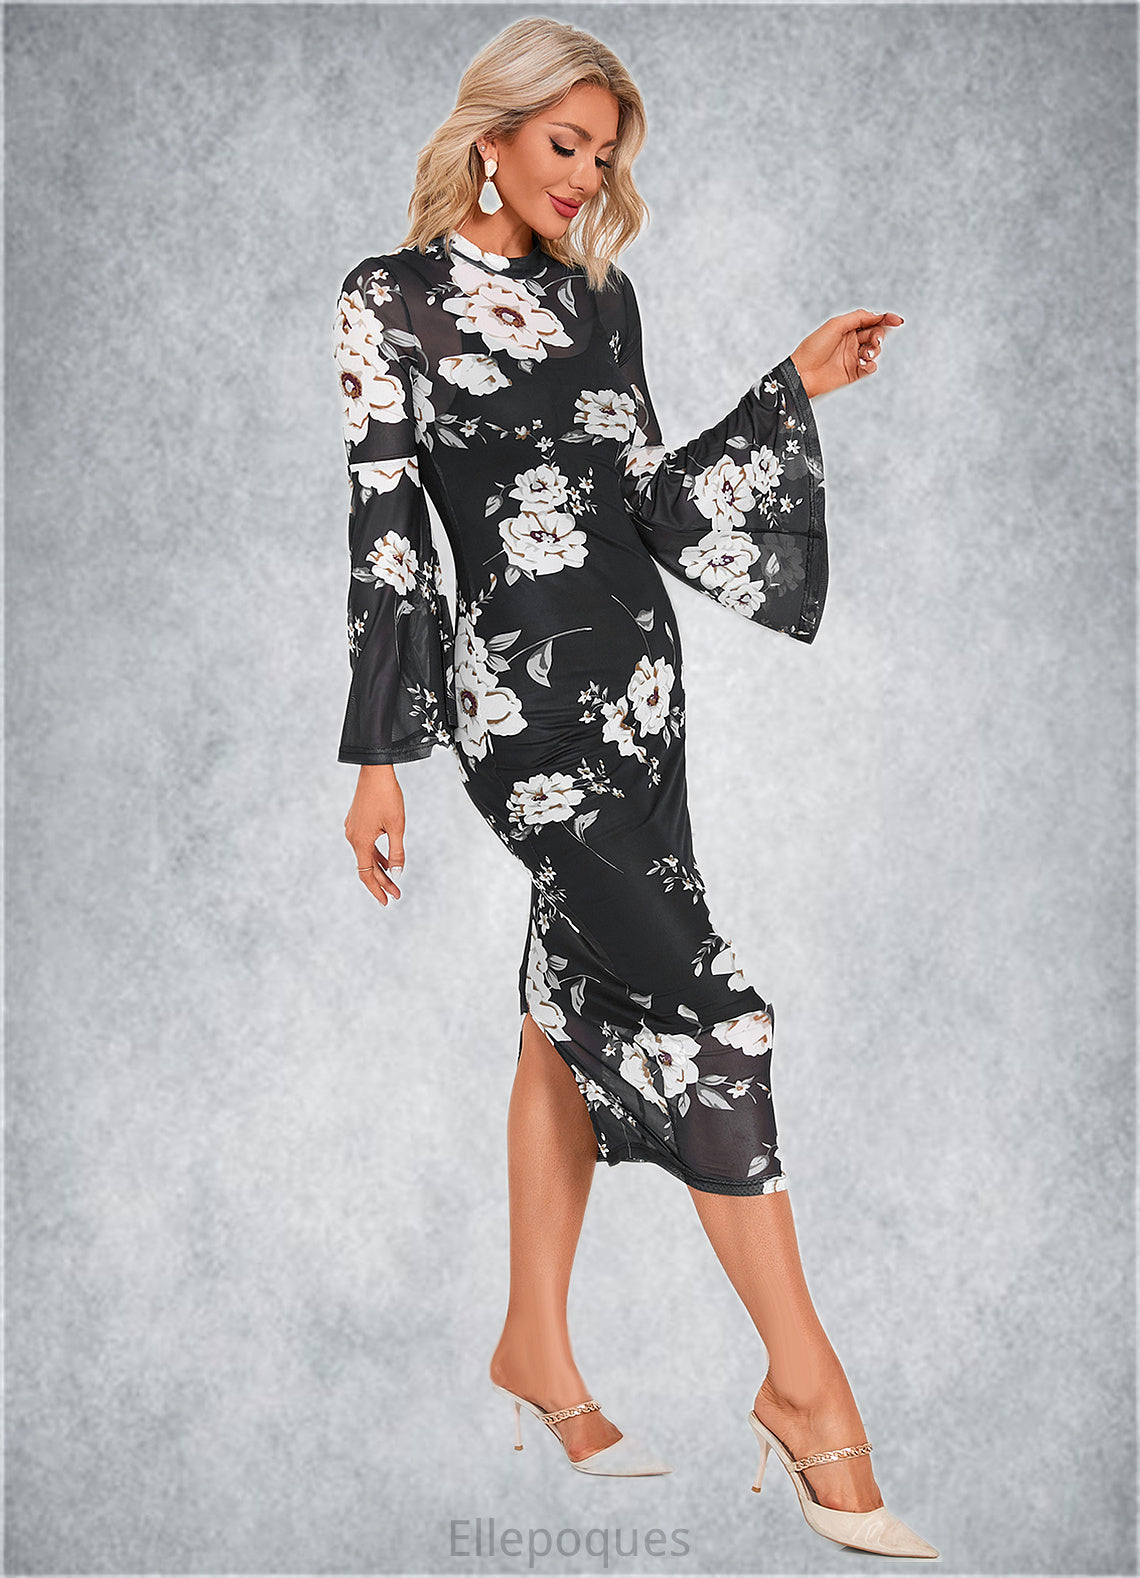 Daisy Floral Print High Neck Elegant Bodycon Spandex Midi Dresses HOP0022470